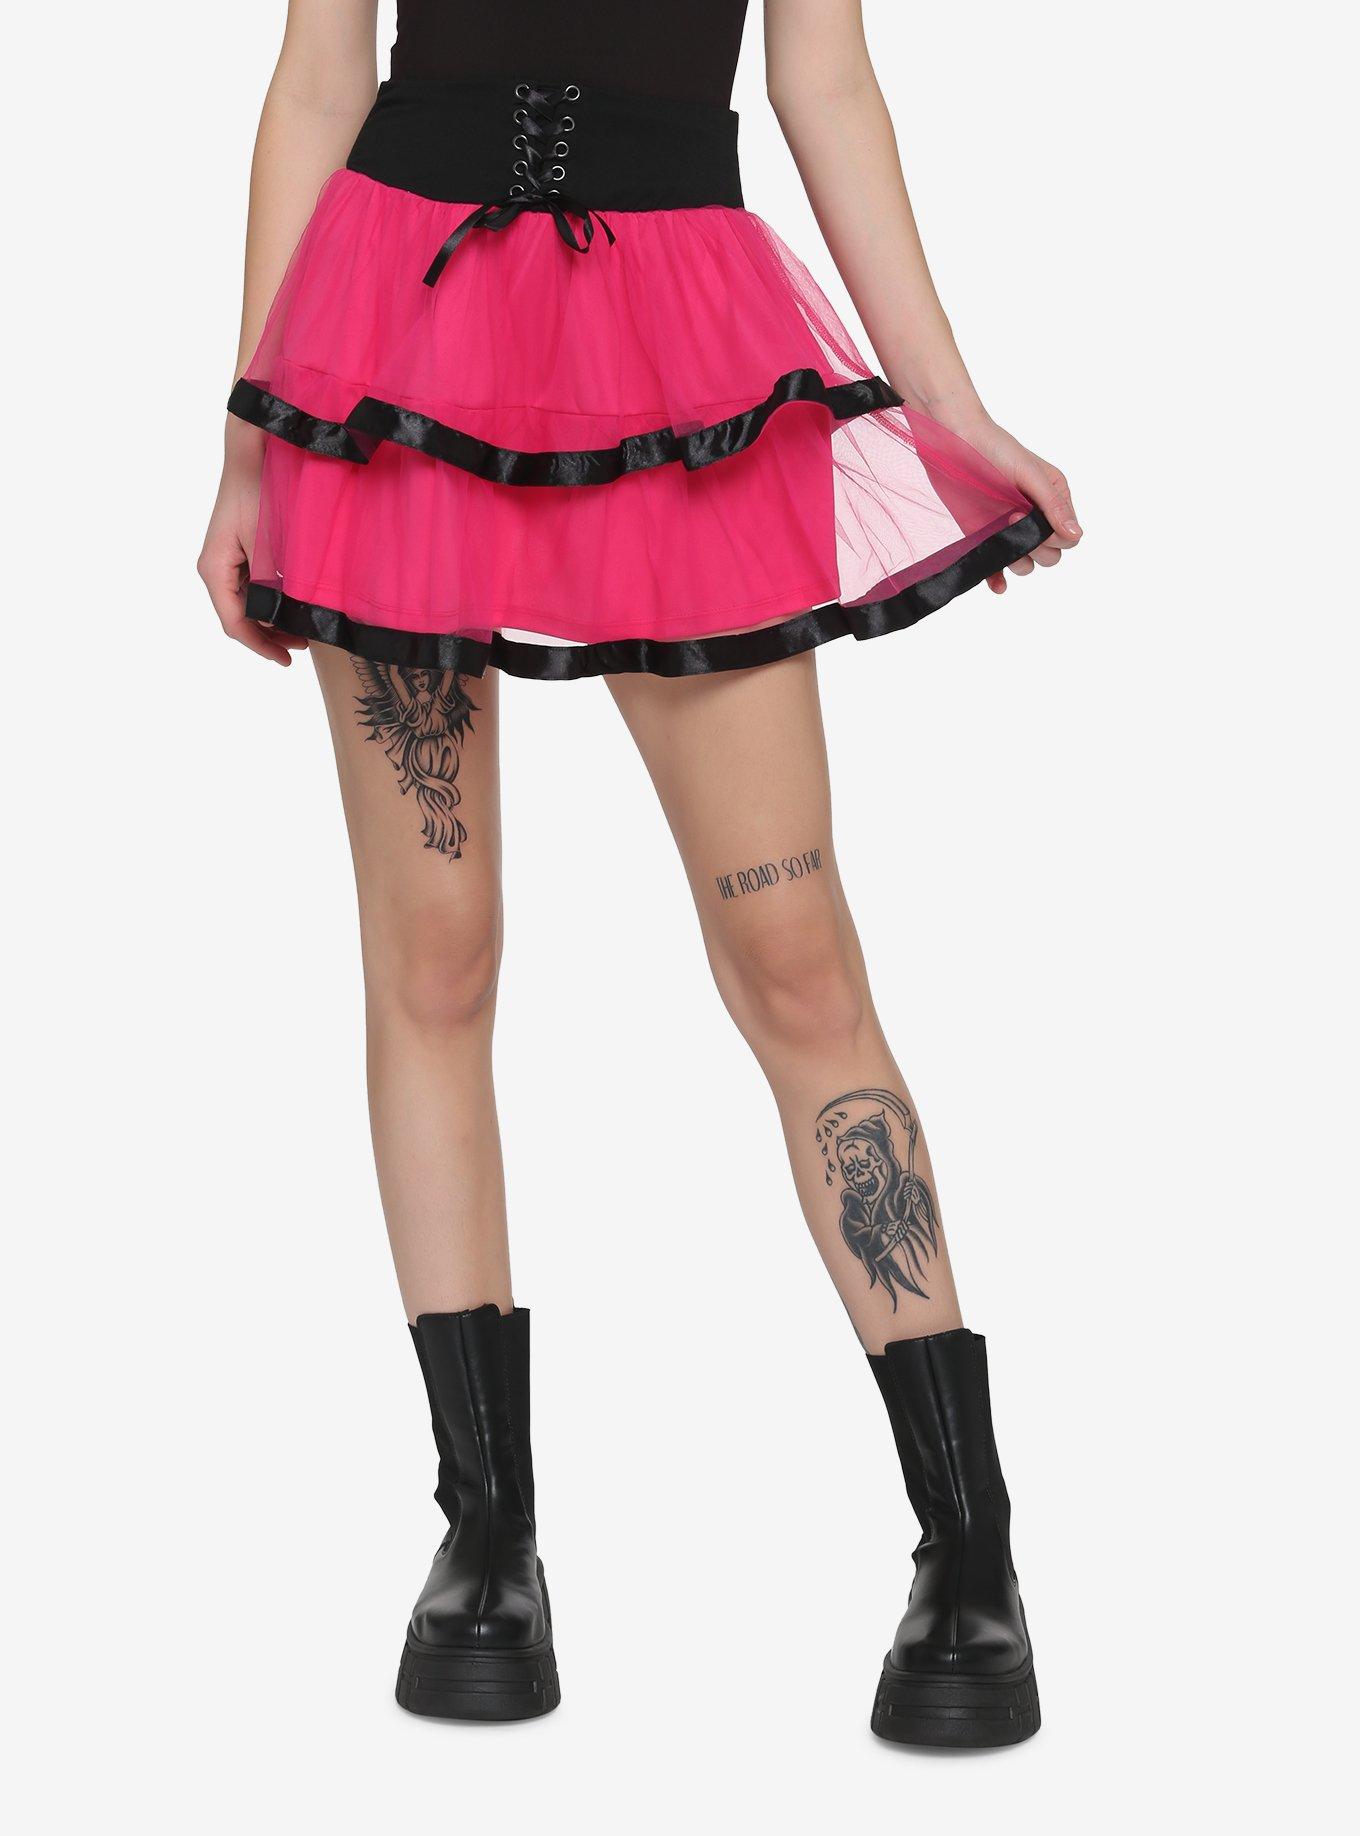 Hot Pink And Black Tutu Skirt Hot Topic 